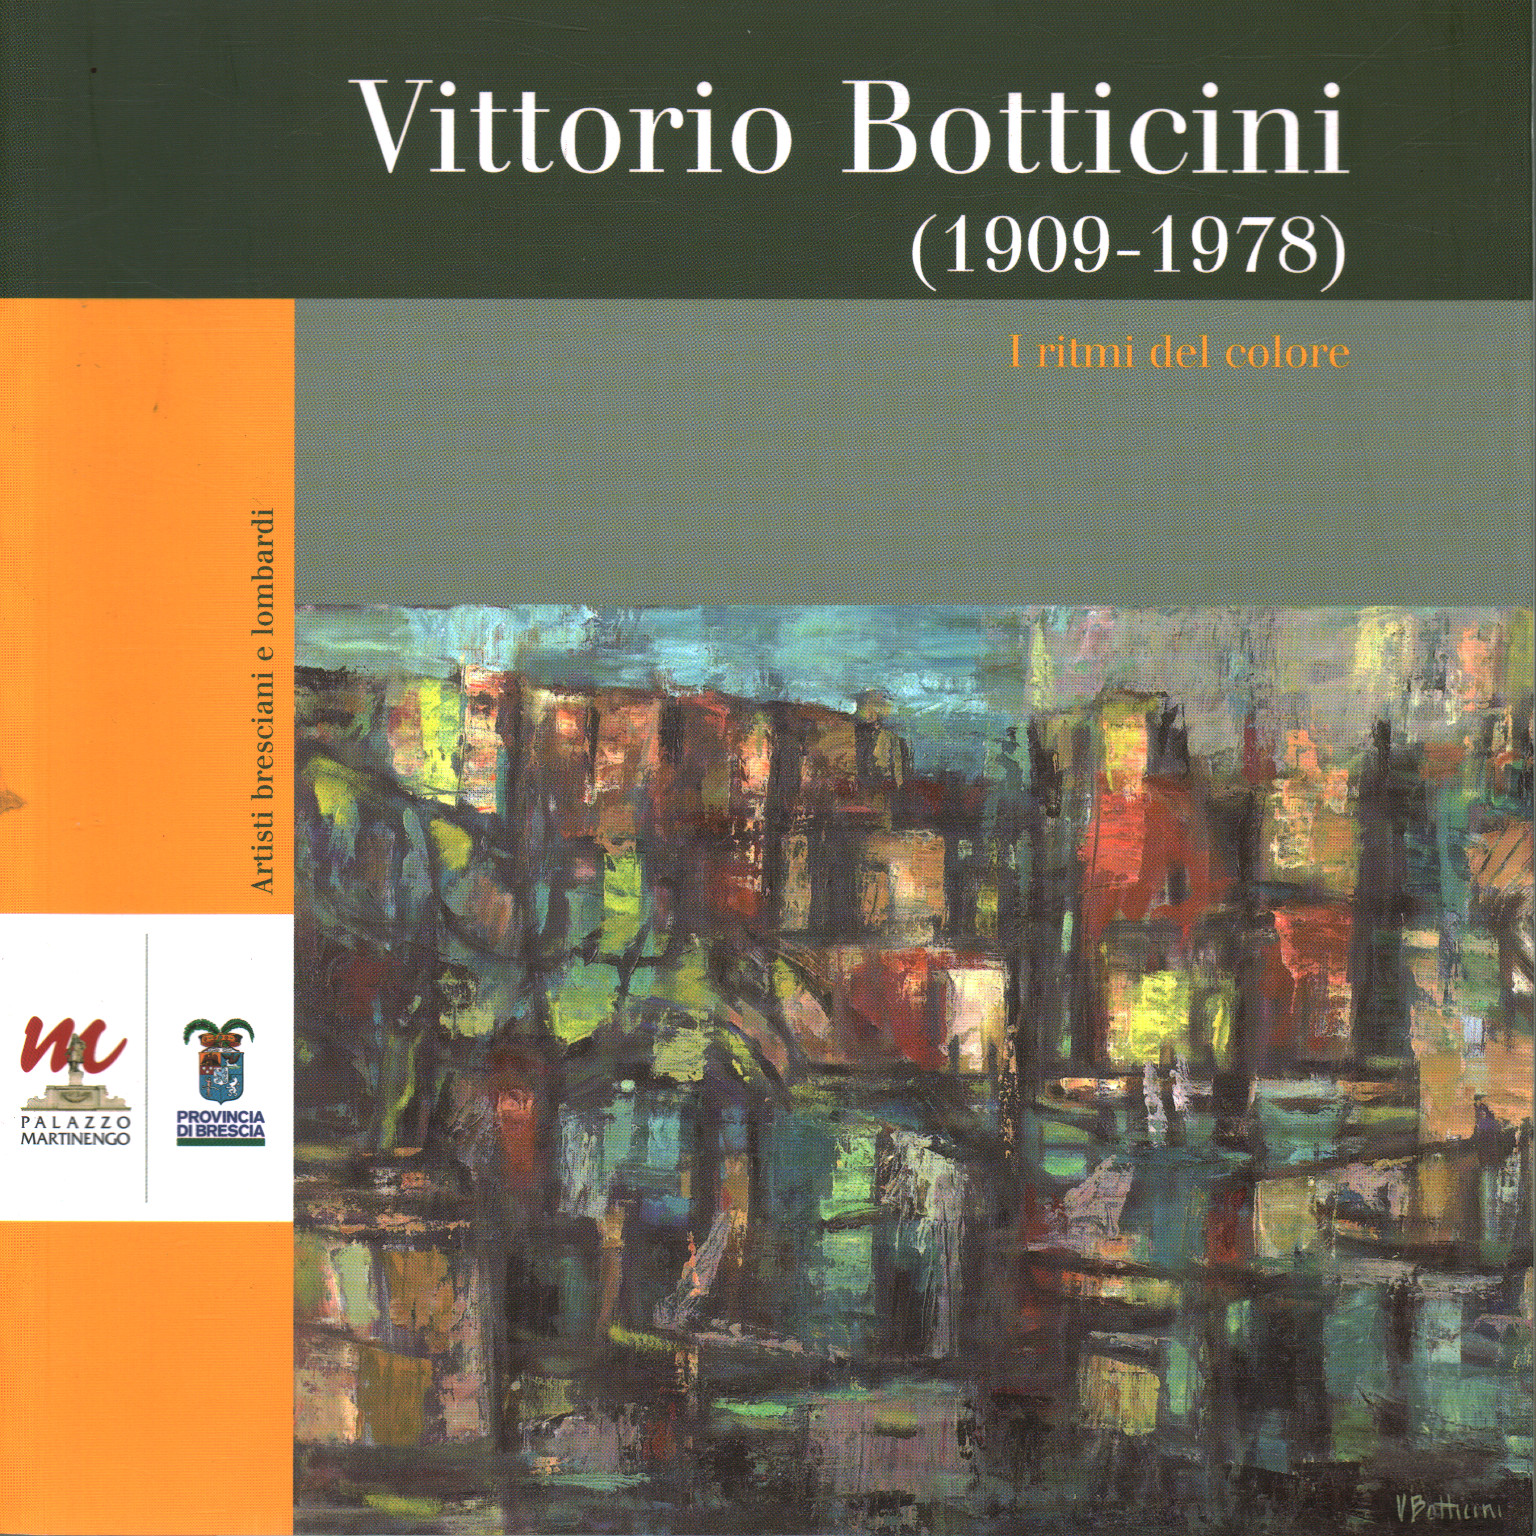 Vittorio Botticini (1909-1978). Les rythmes de la couleur, Elena Pontiggia